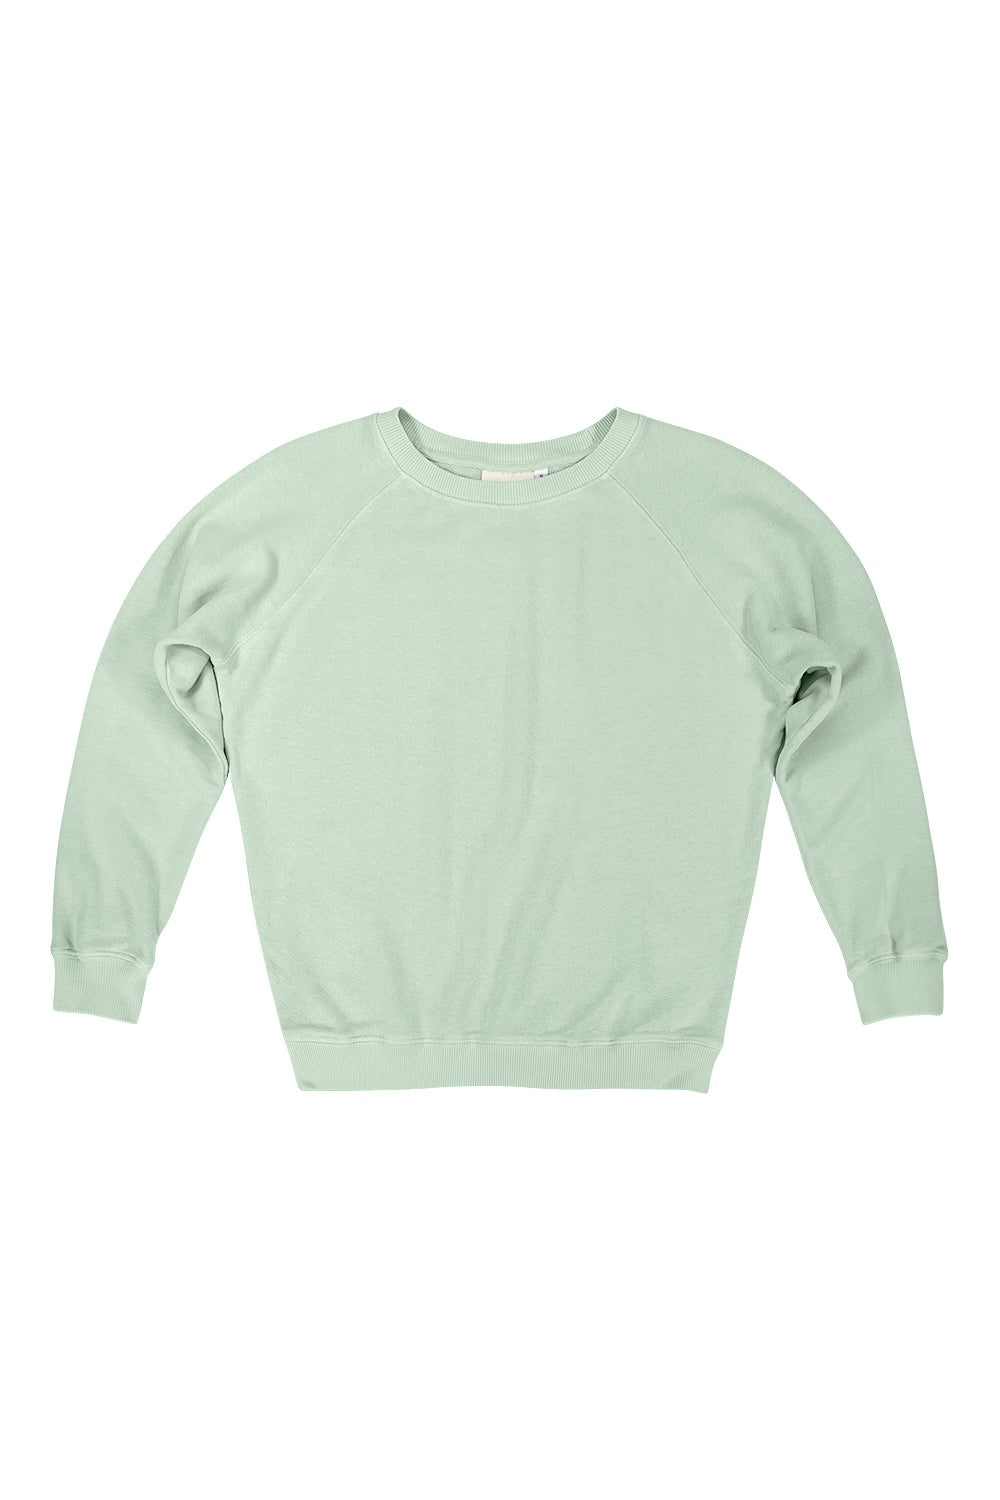 Bonfire Raglan Sweatshirt | Jungmaven Hemp Clothing & Accessories / Color: Seafoam Green